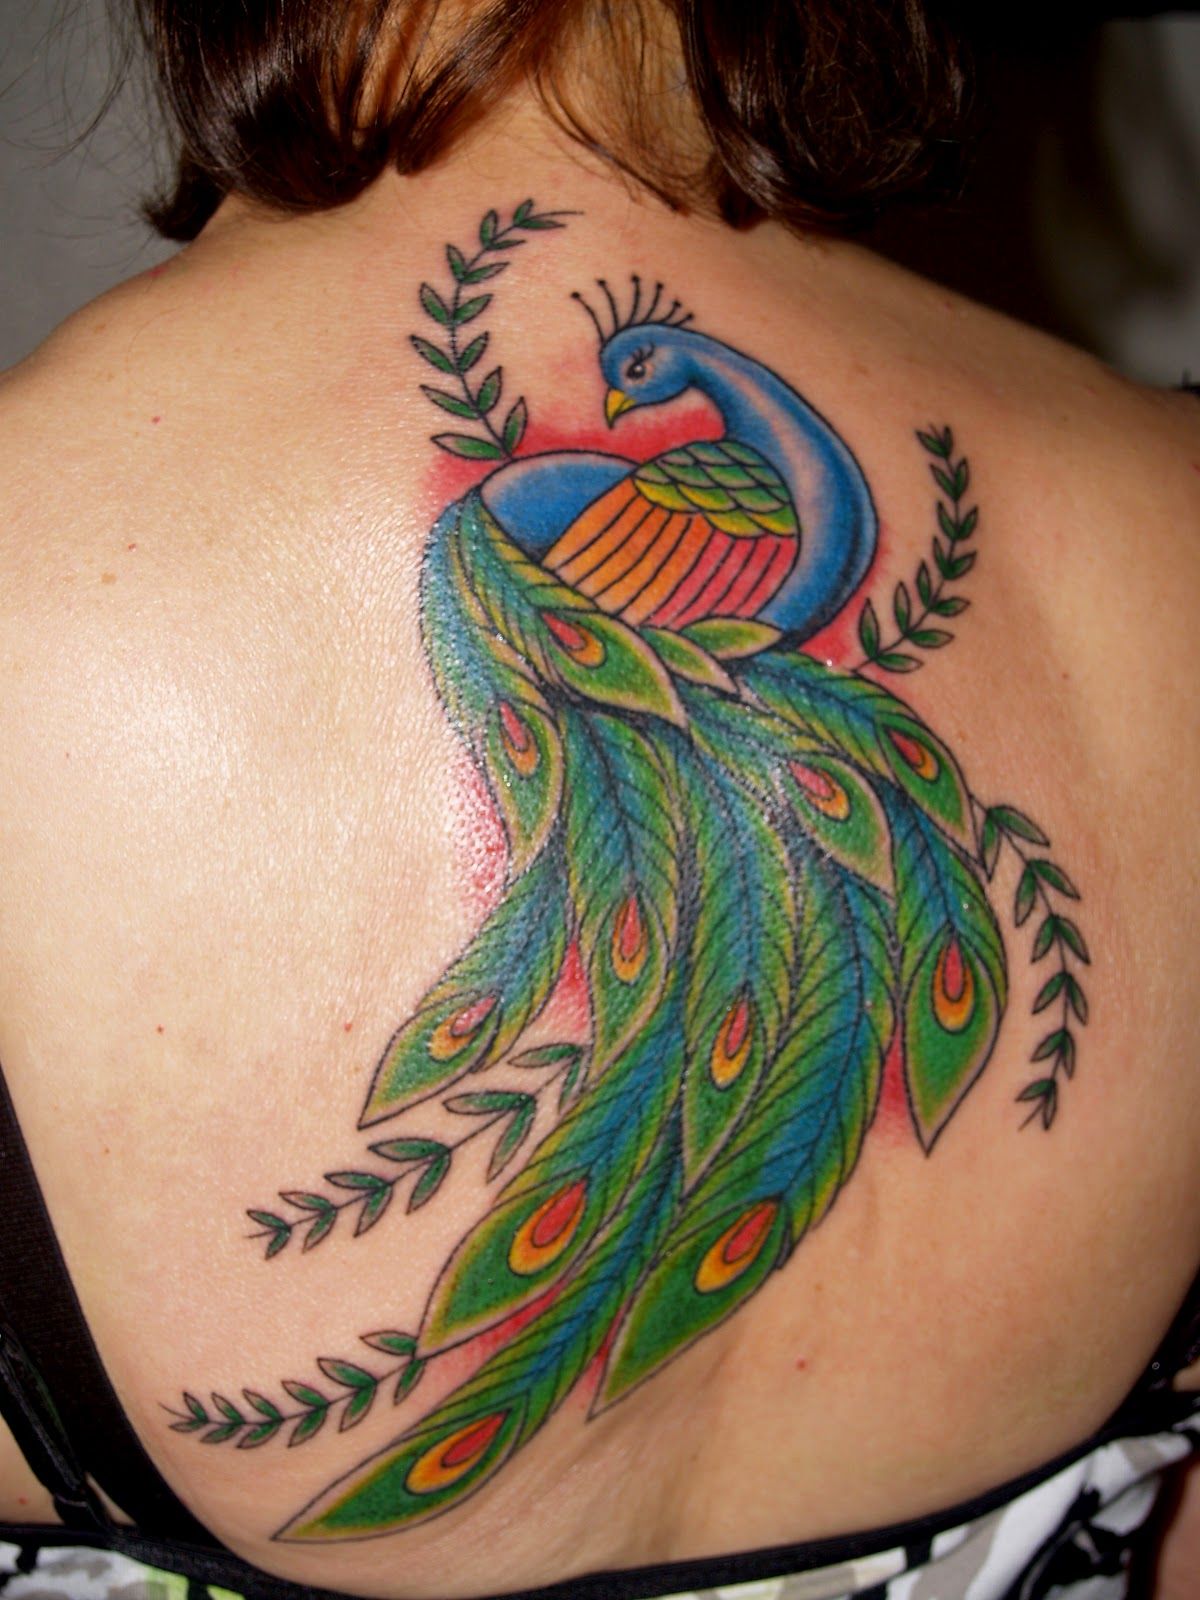 Peacock Tattoo Designs For Women -   Peacock tattoo Ideas